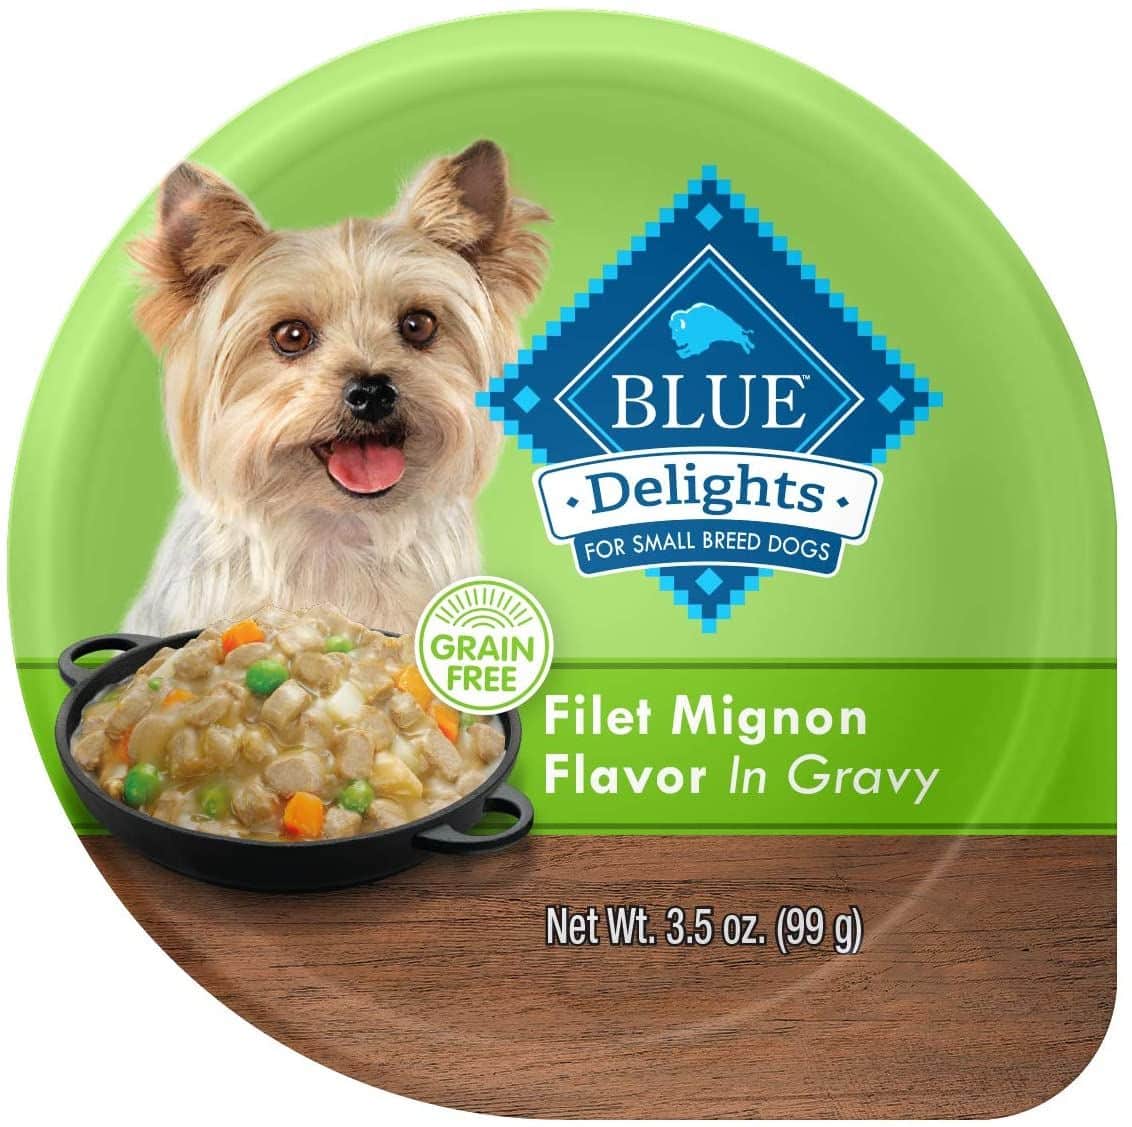 eat your own dog food amazon